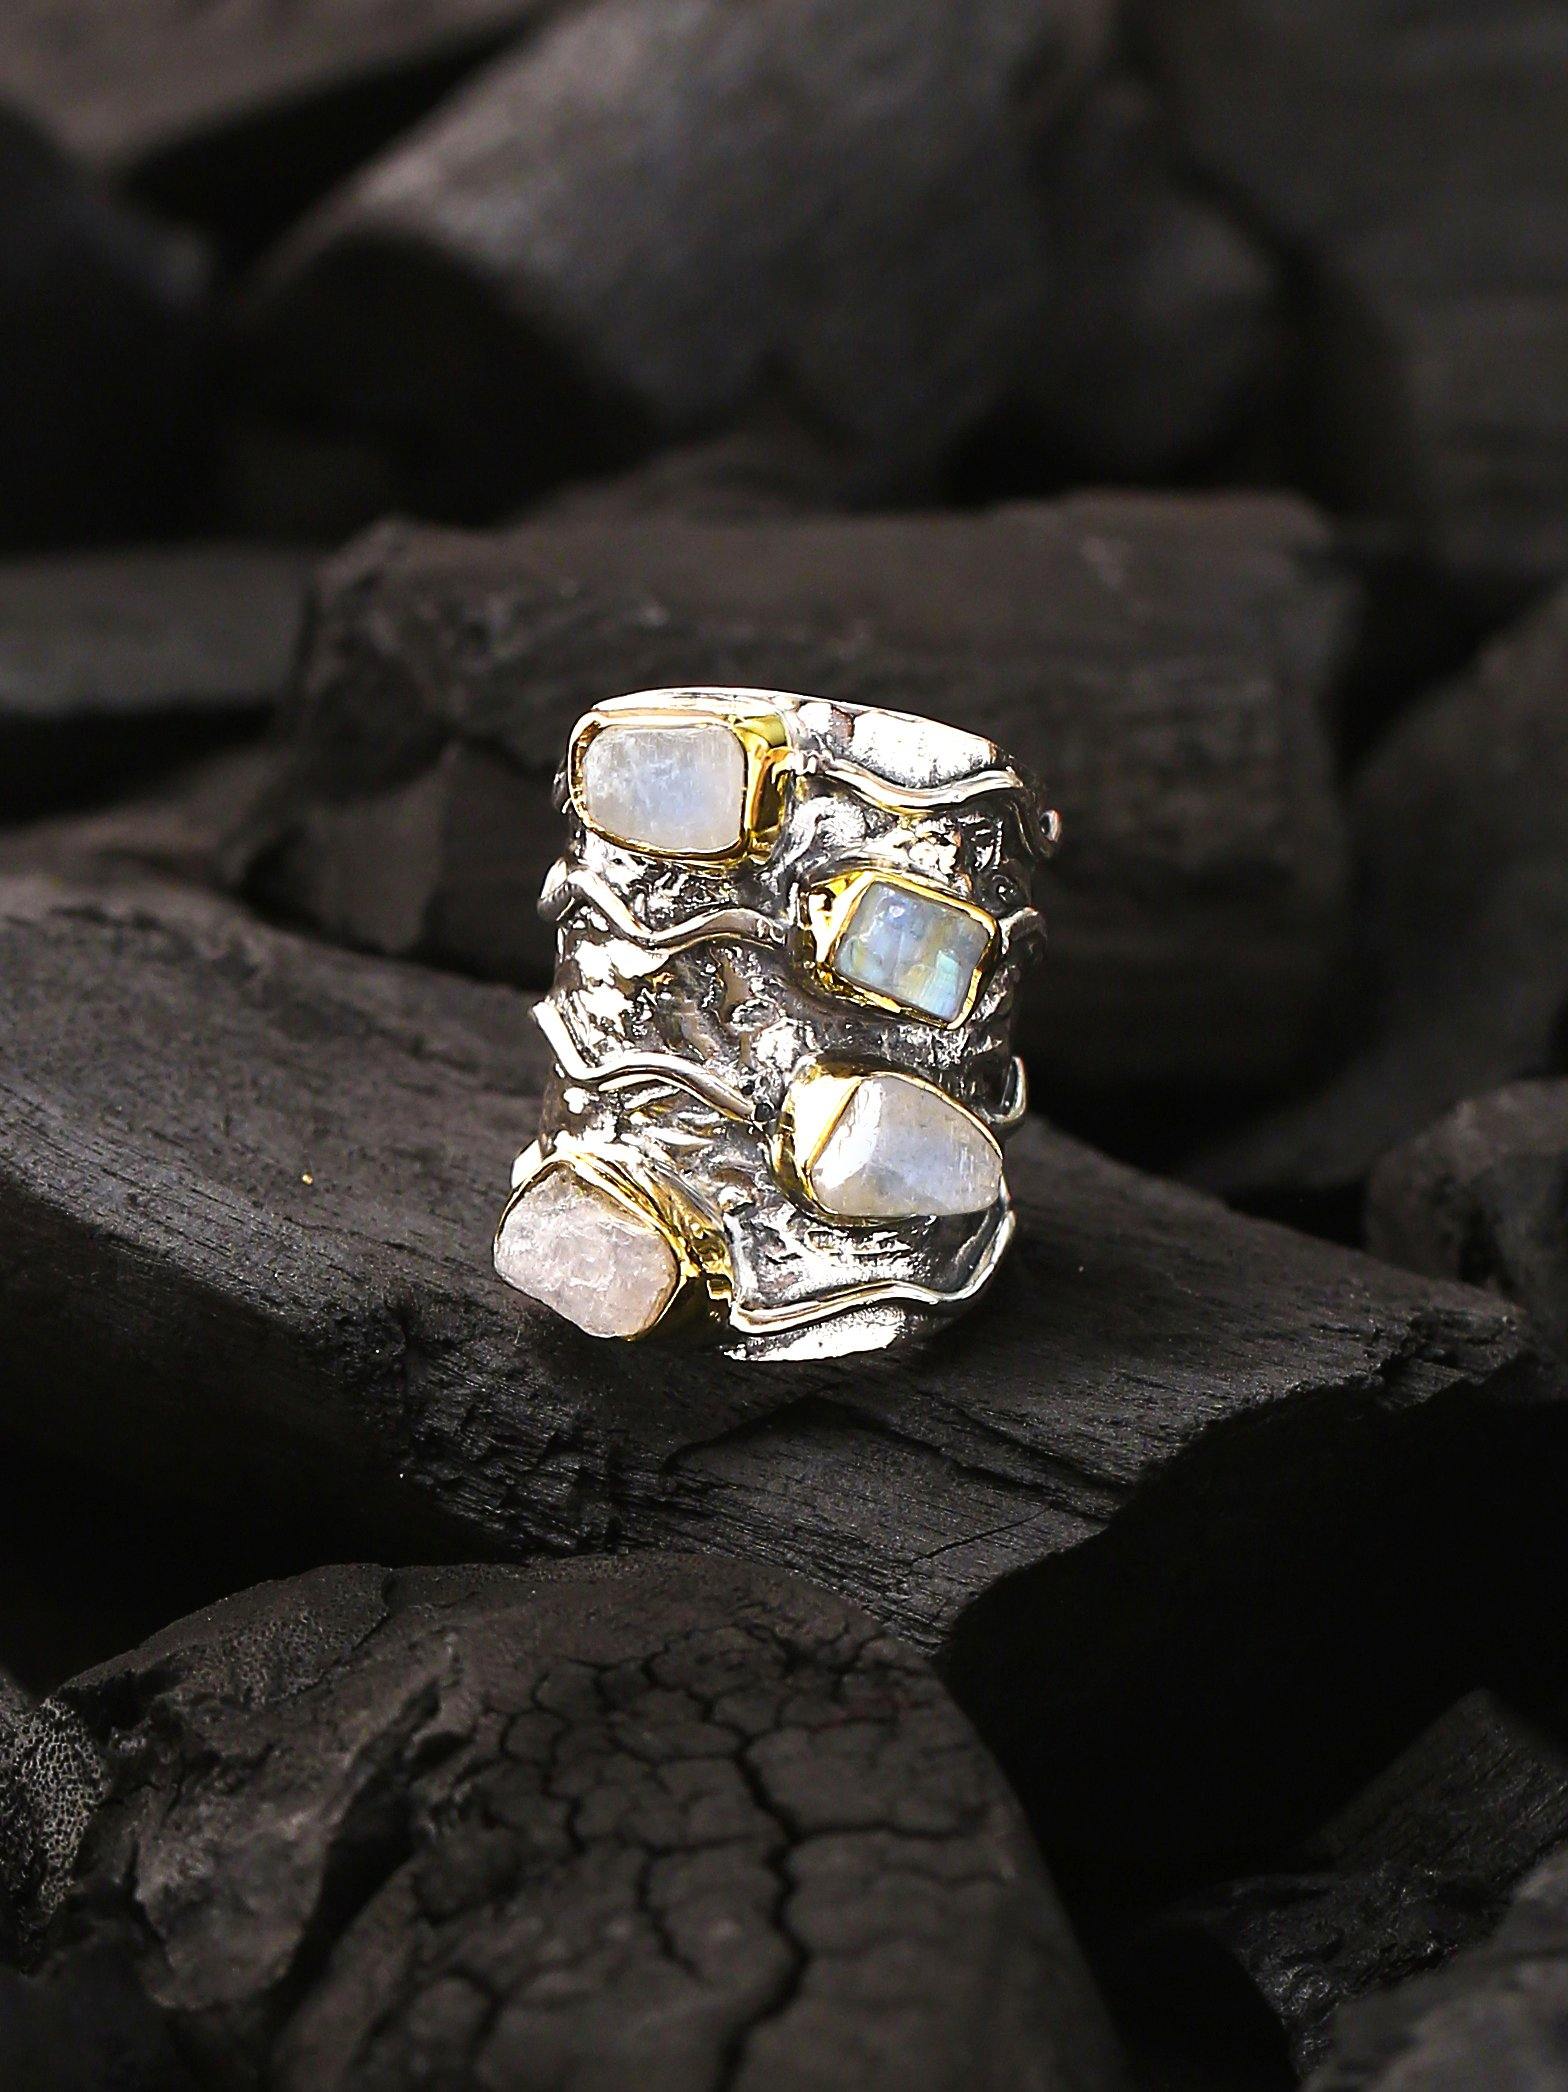 Rough Rainbow Moonstone Ring Solid 925 Sterling Silver Brass Gemstone Jewelry - YoTreasure